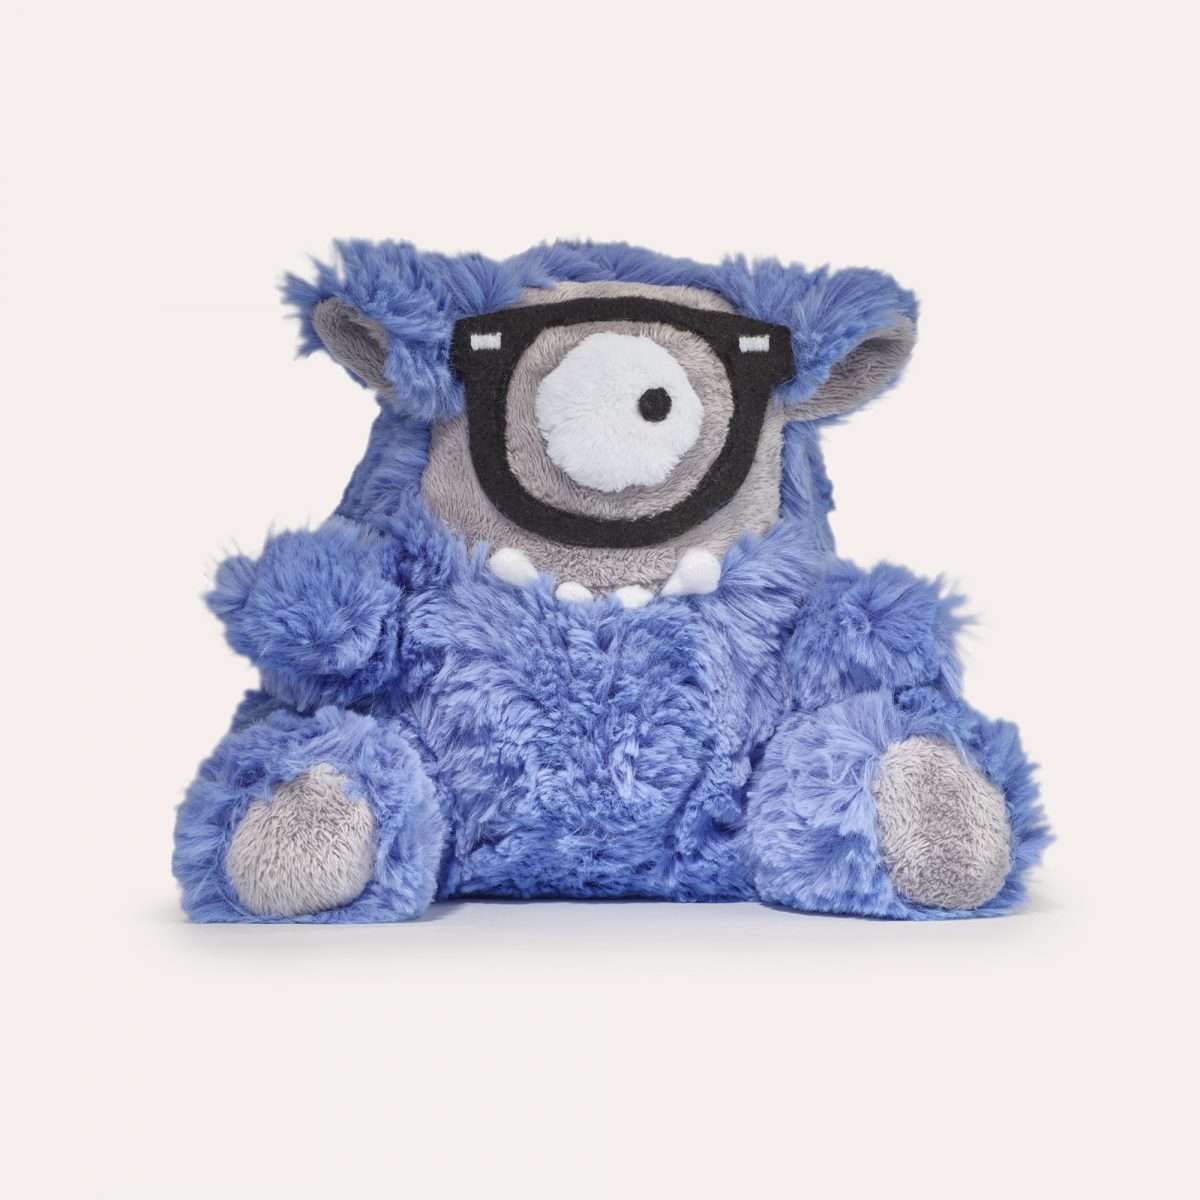 Creachums Fizz Stuffed Toy Creature Front